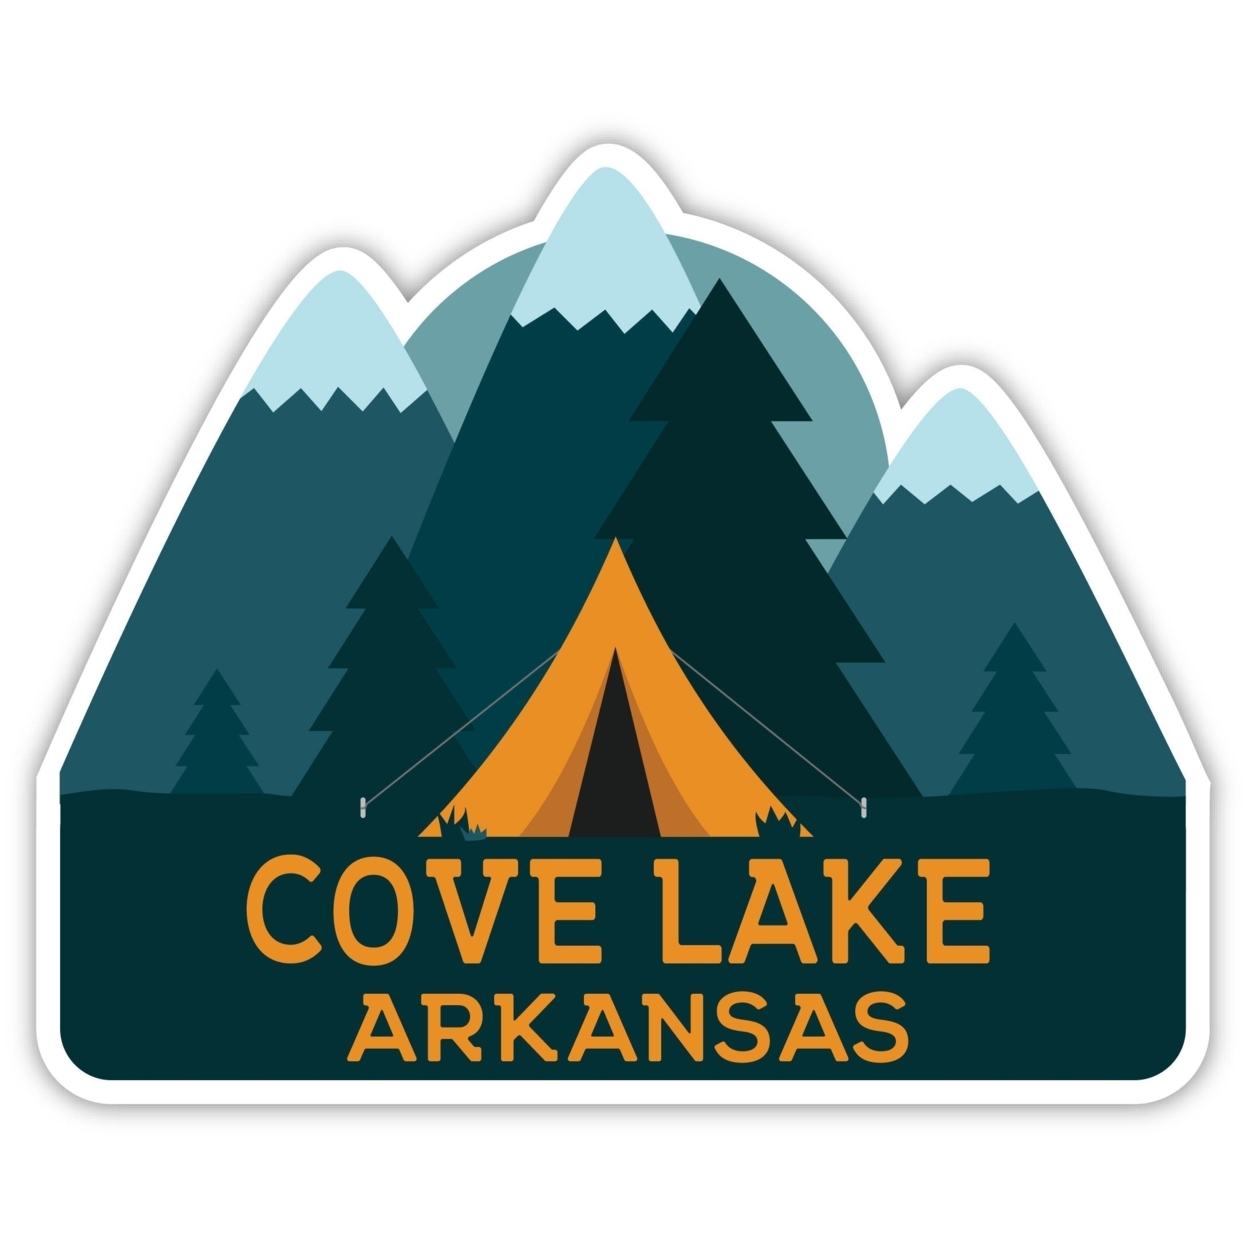 Cove Lake Arkansas Souvenir Decorative Stickers (Choose Theme And Size) - 4-Pack, 4-Inch, Tent